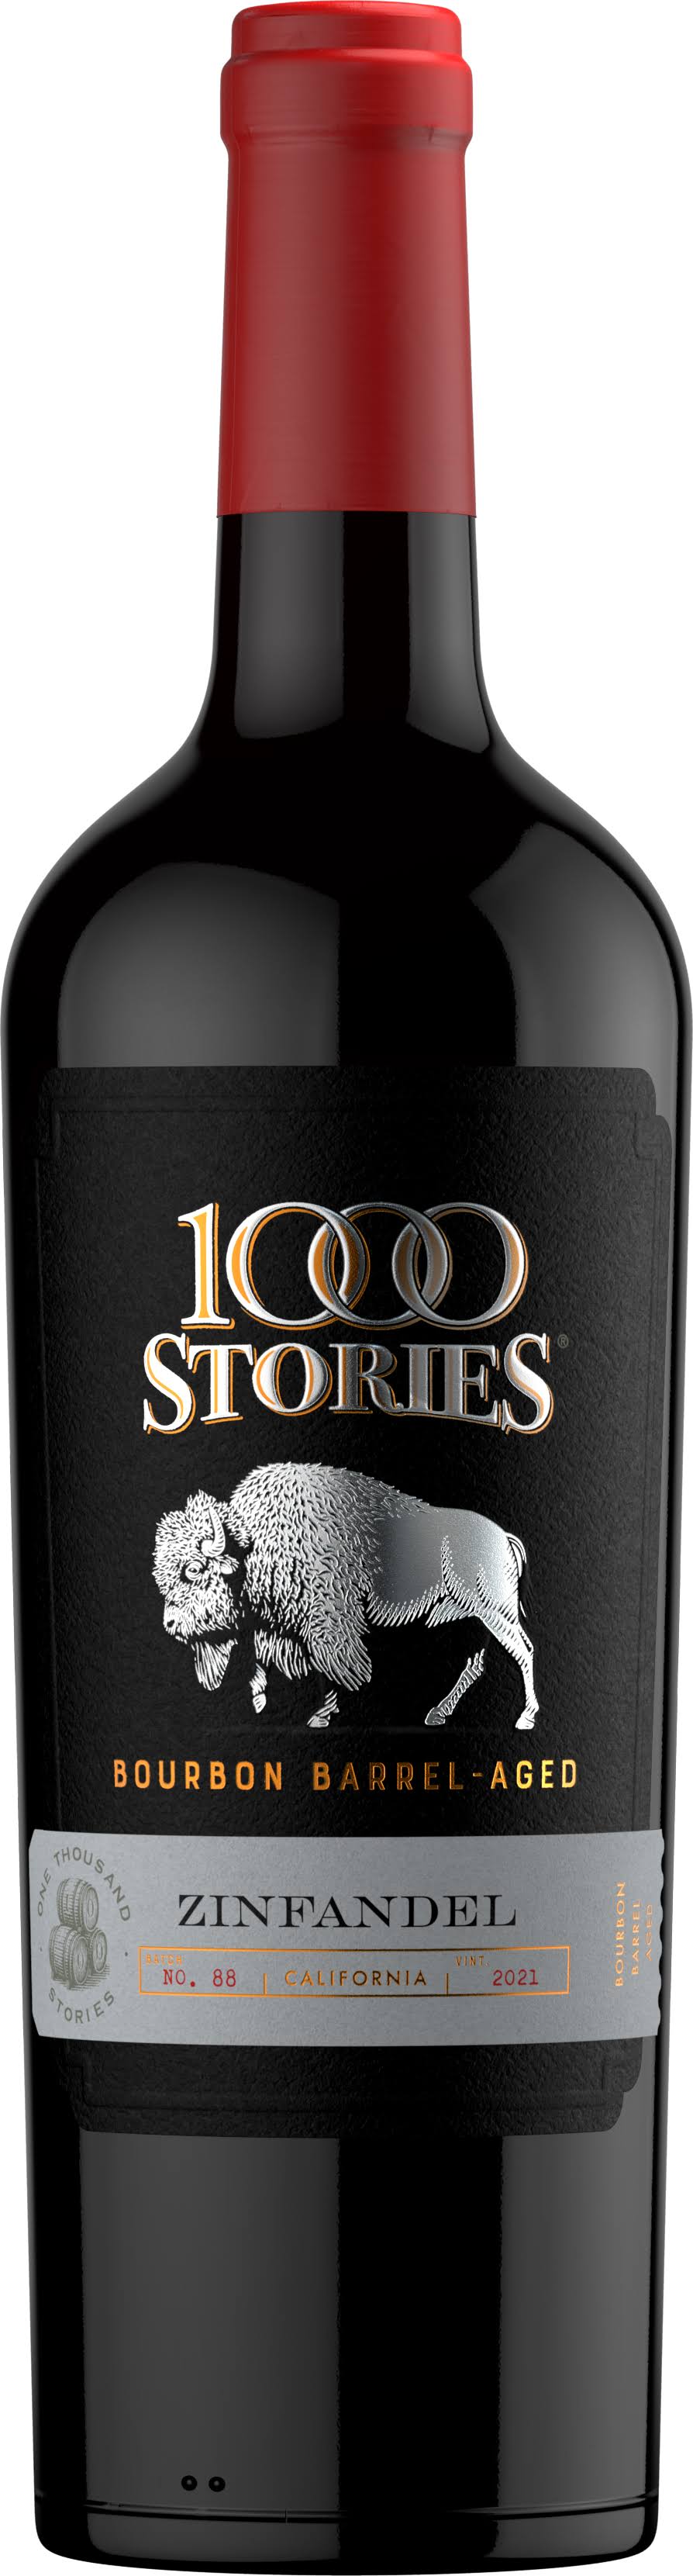 1000 Stories Zinfandel - California, USA